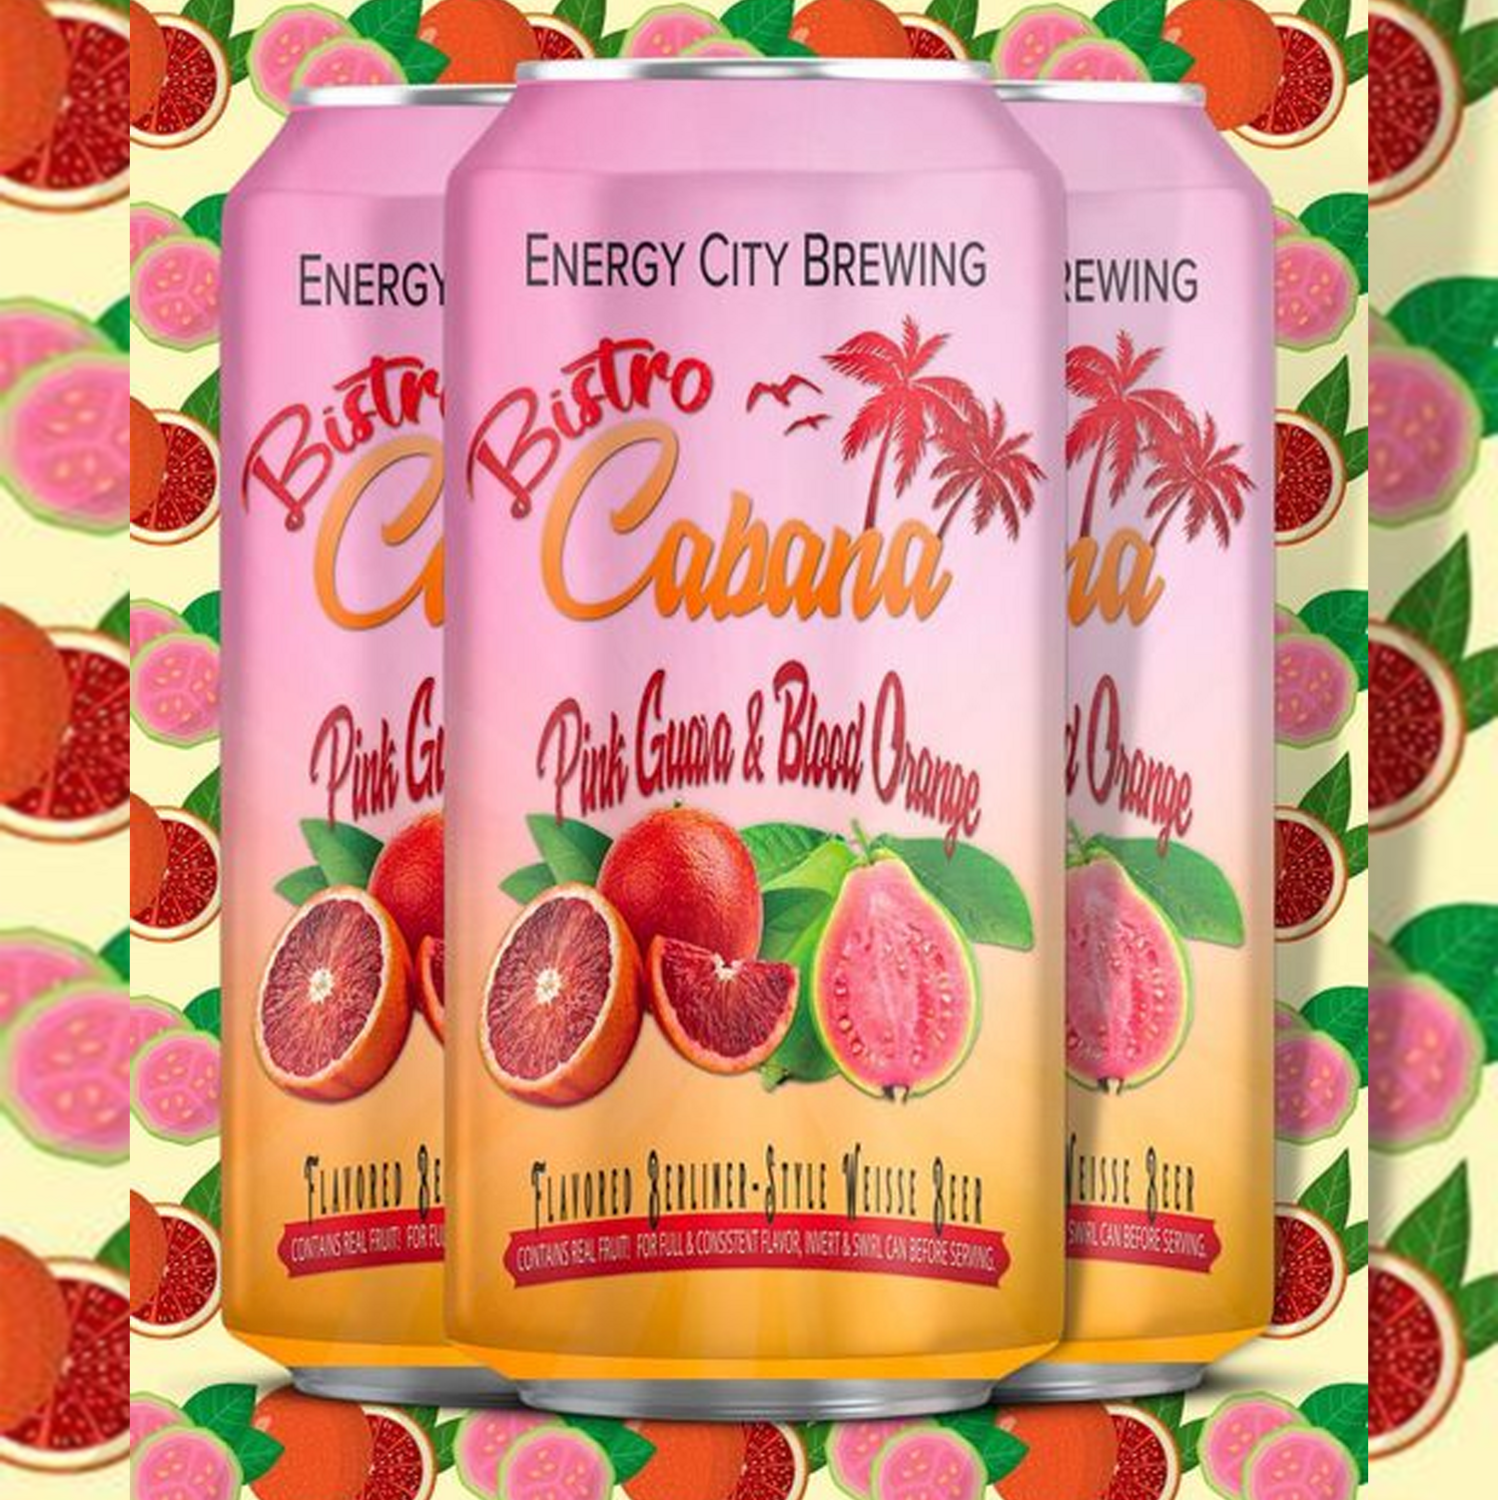 Energy City Bistro Cabana Pink Guava & Blood Orange Fruited Berliner Weisse